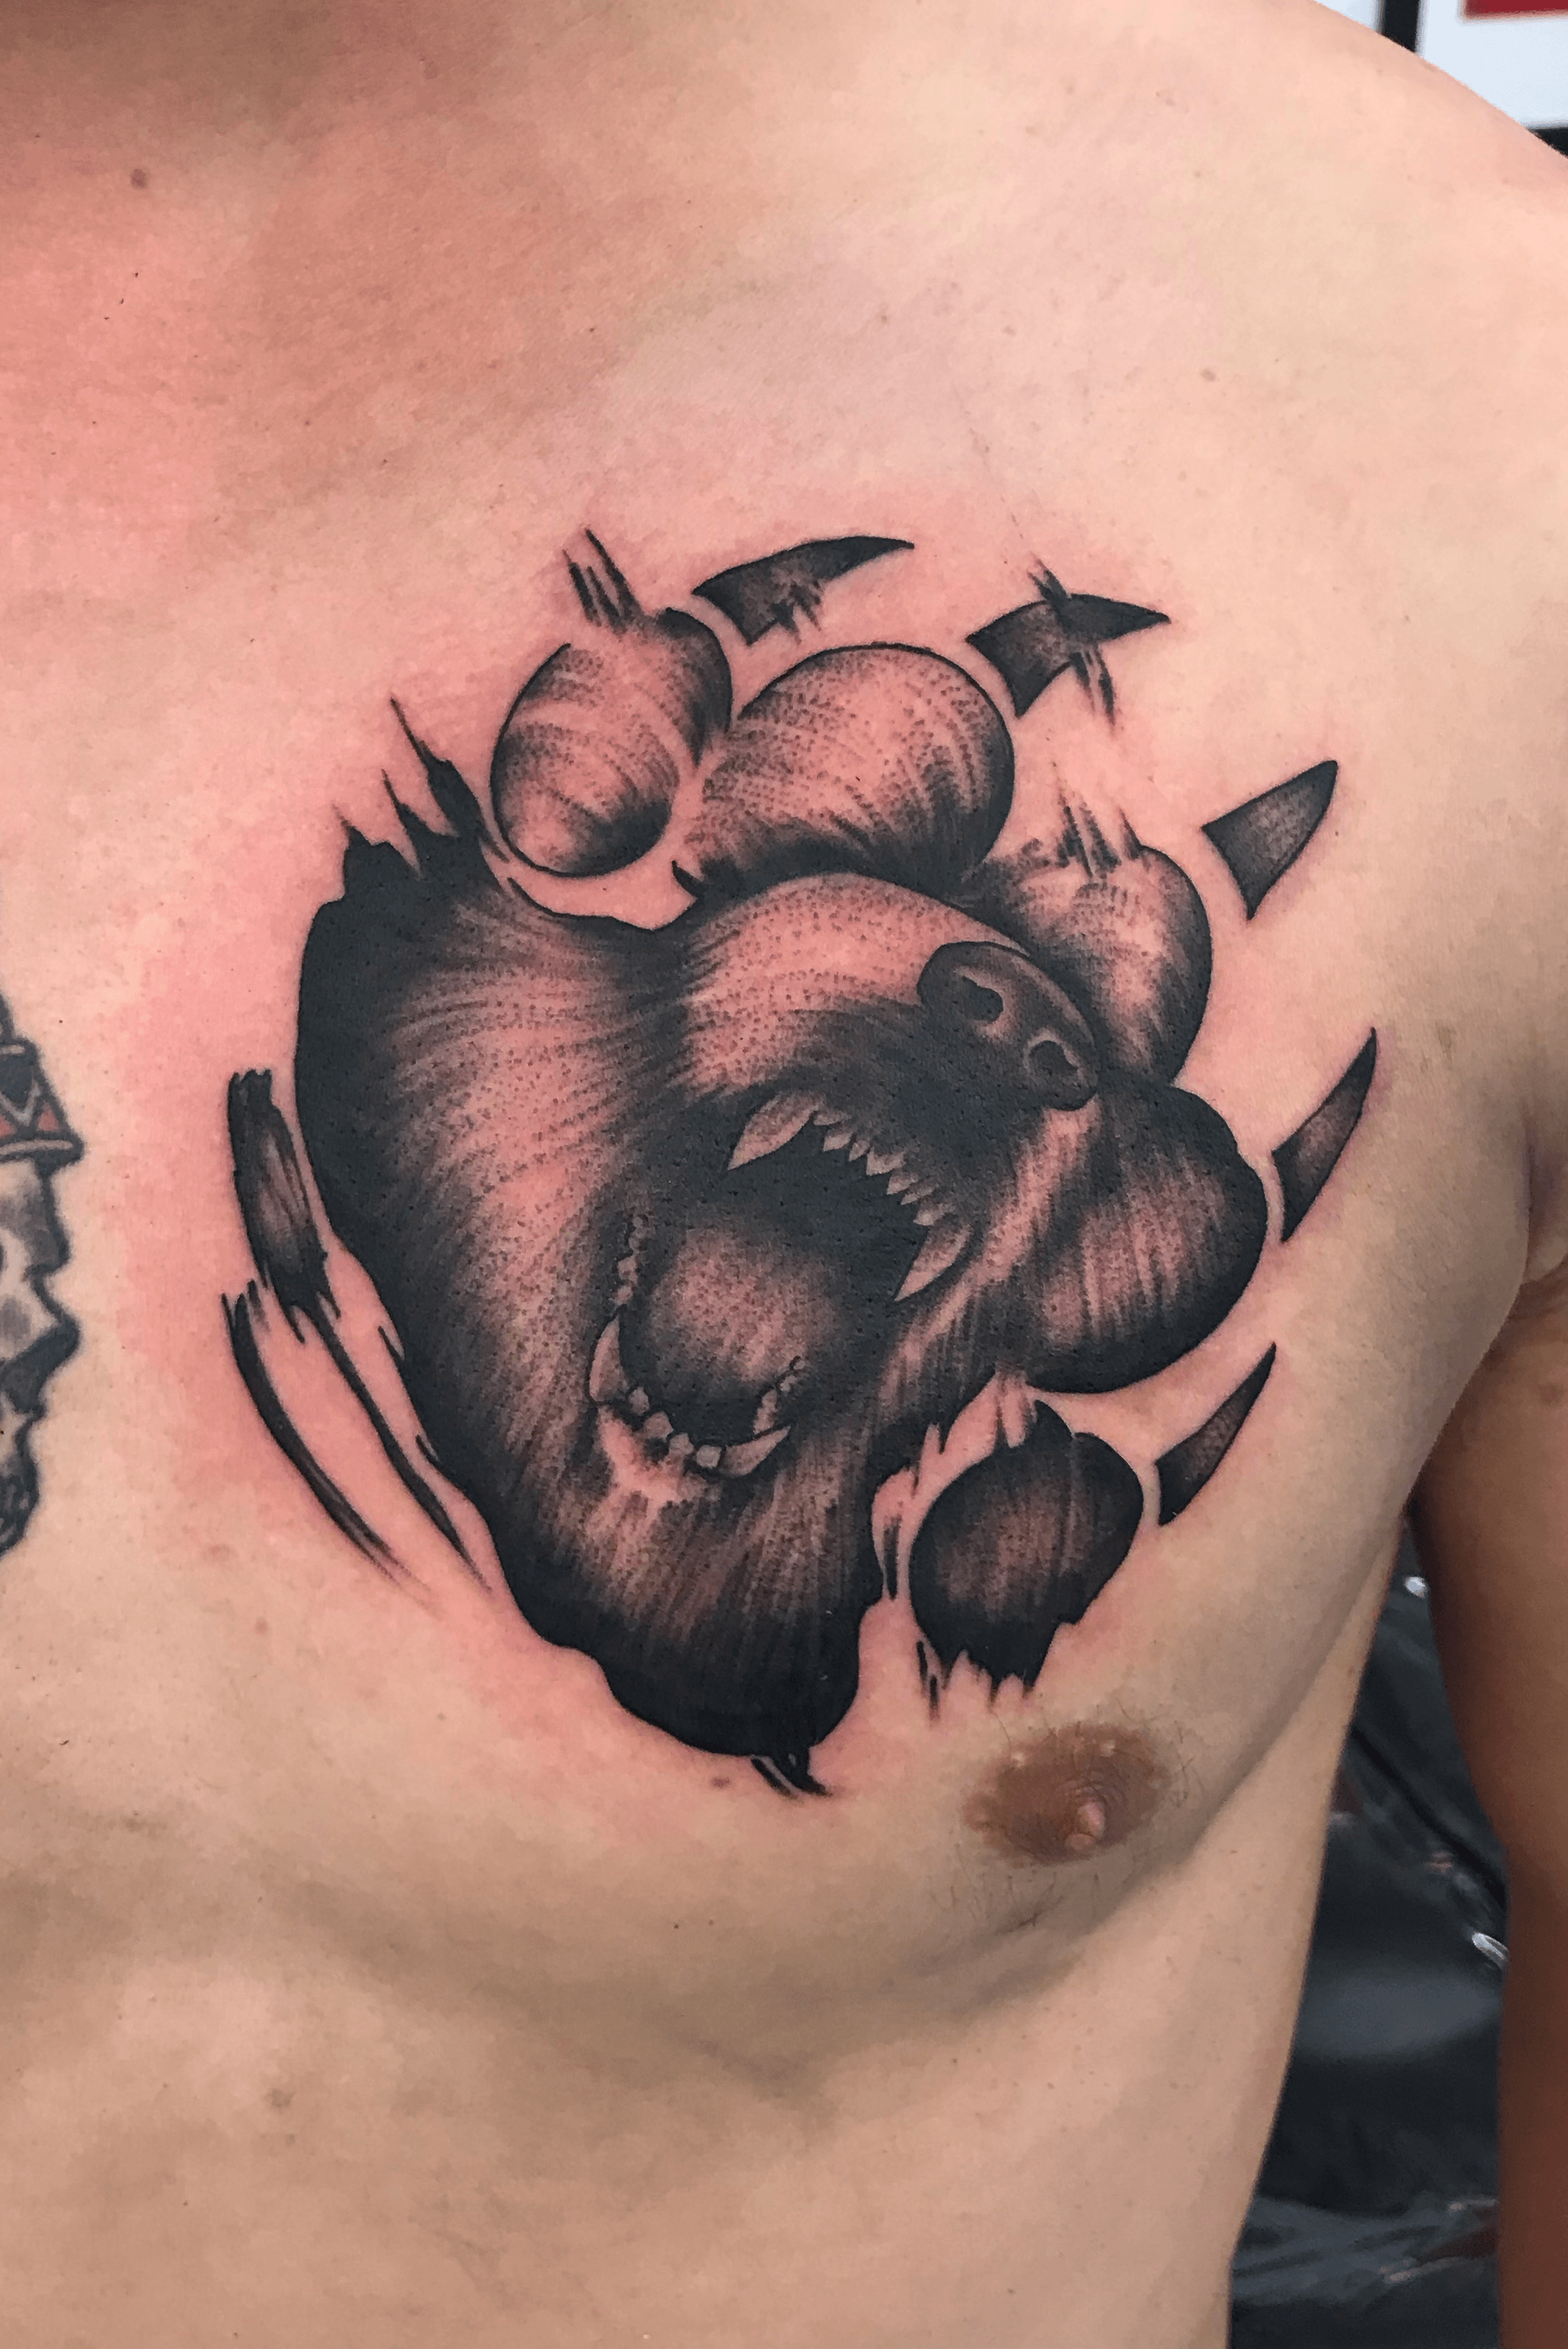 Bear tattoo for women how to make it more feminine 